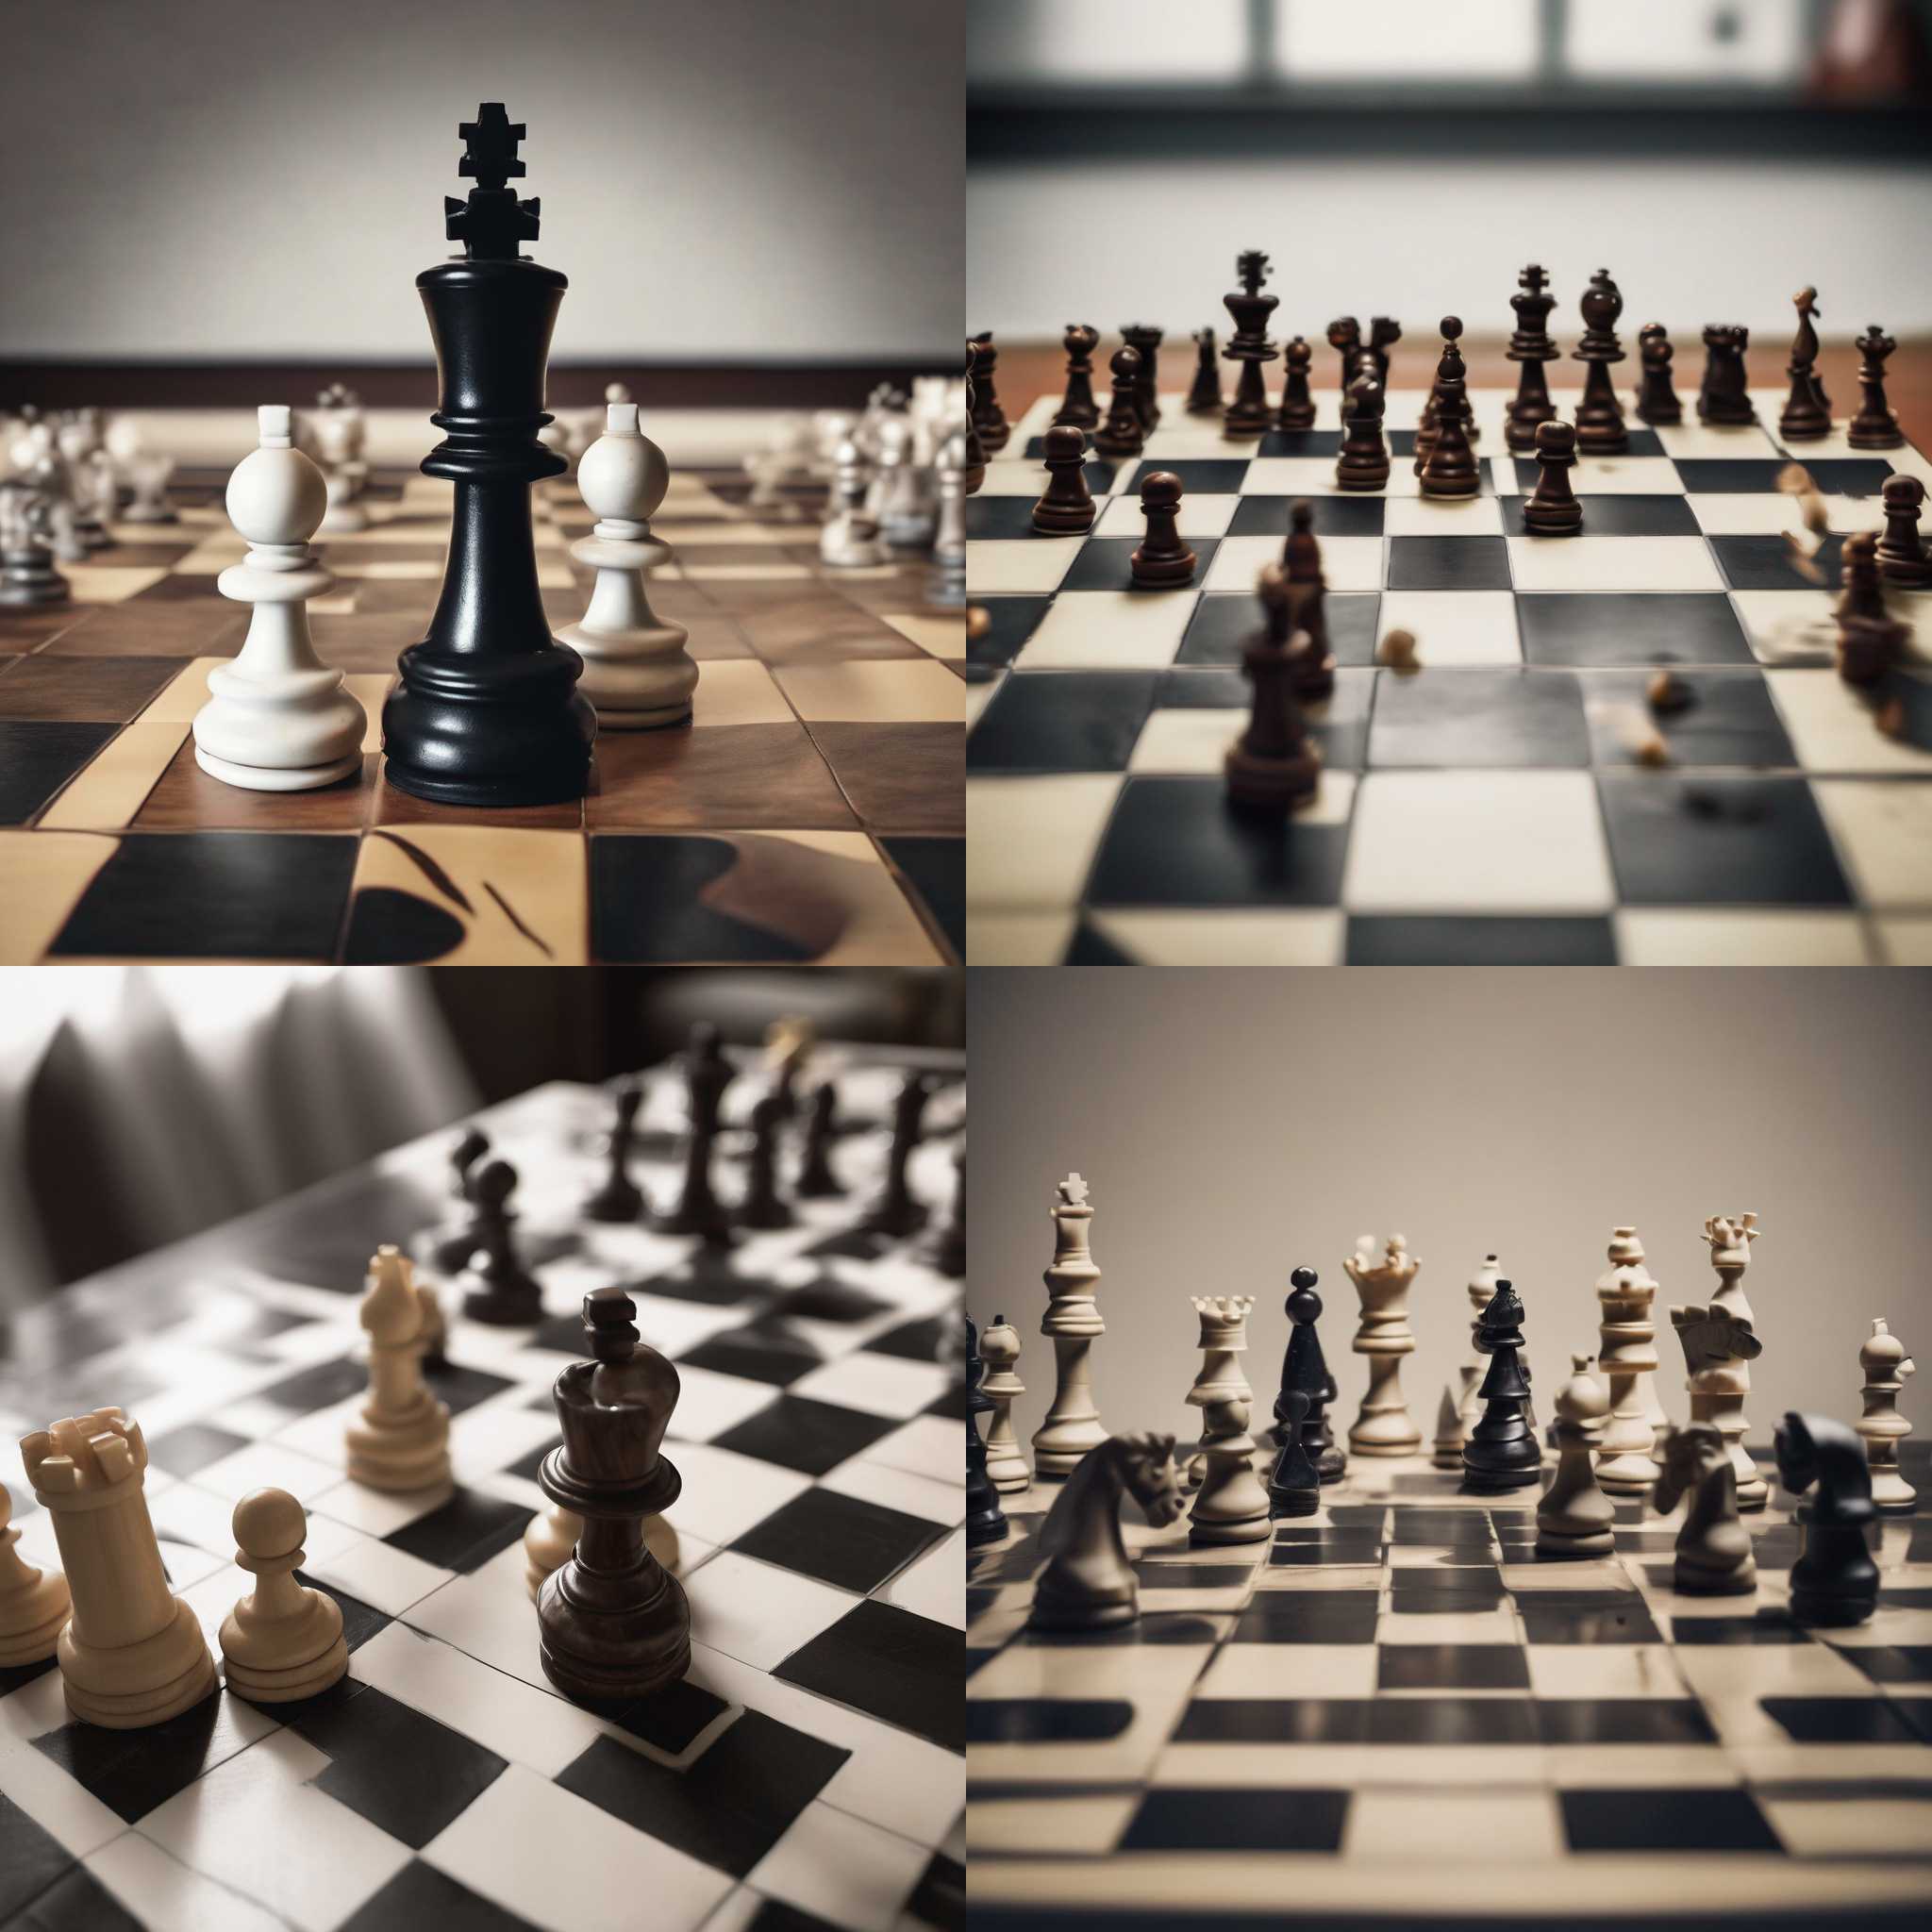 A chessboard halfway through a game